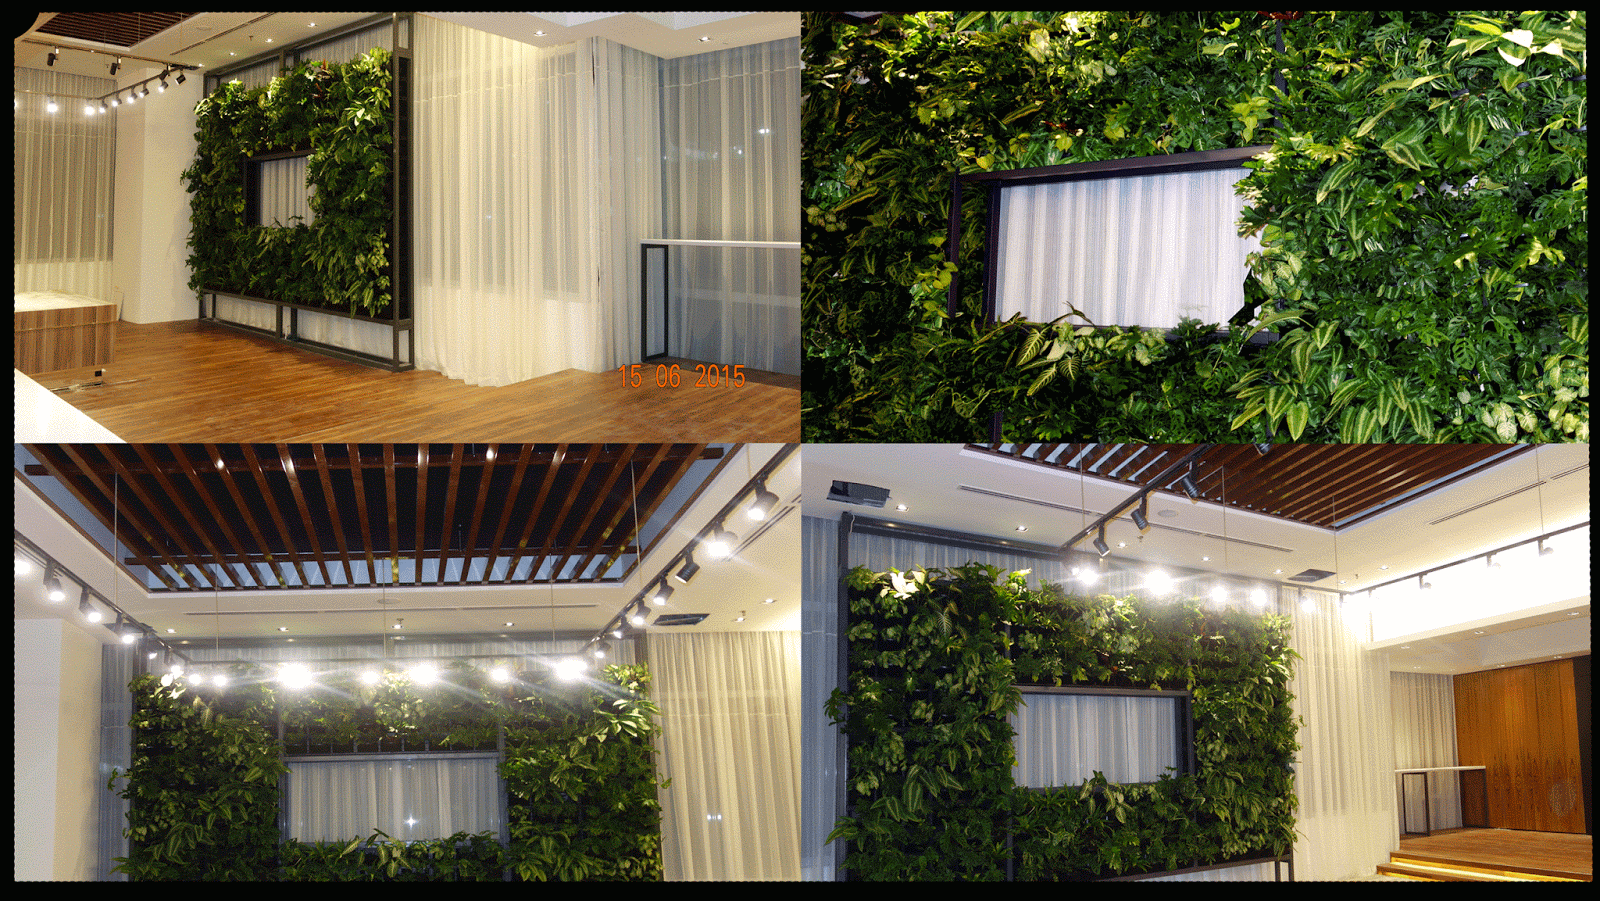 Vertical Garden Concept for Buildings: Greenwall Vertical Garden System